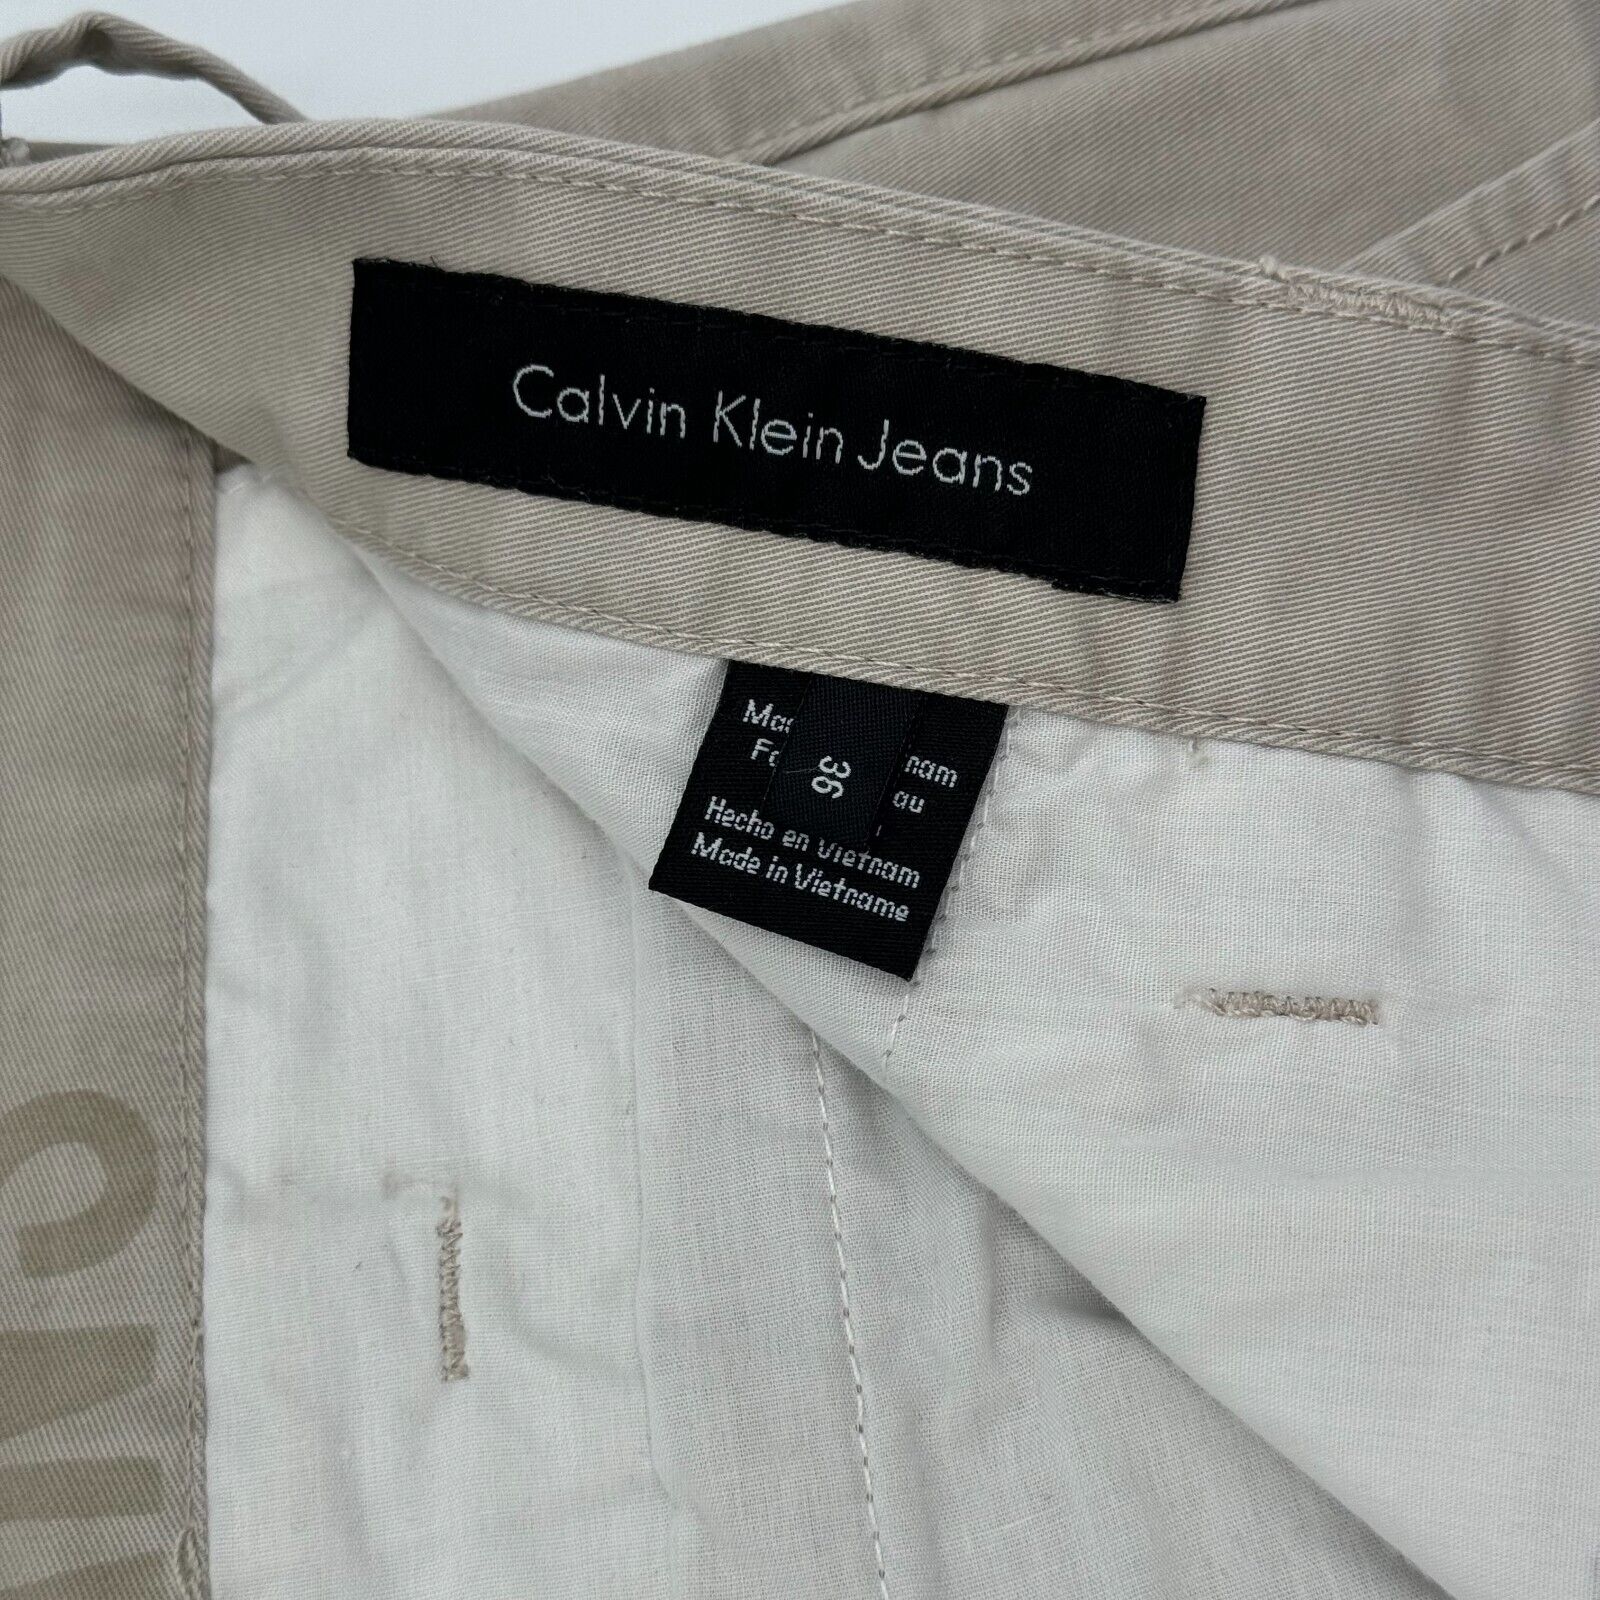 Calvin Klein Jeans Khaki Chino Tan Mens 36x32